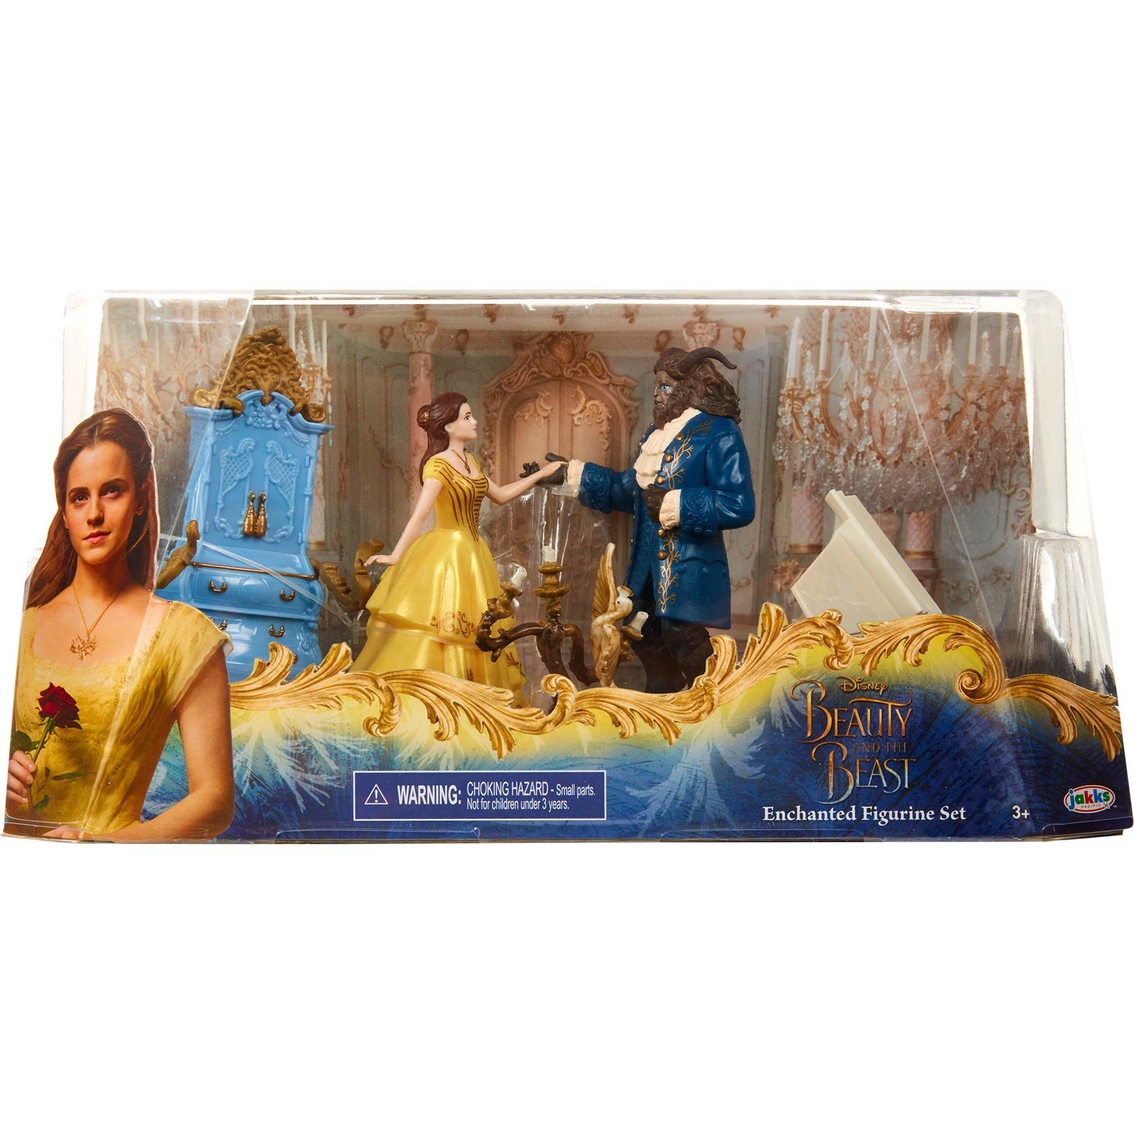 Disney Beauty and the Beast Enchanted Figurine Set - Image 2 of 2